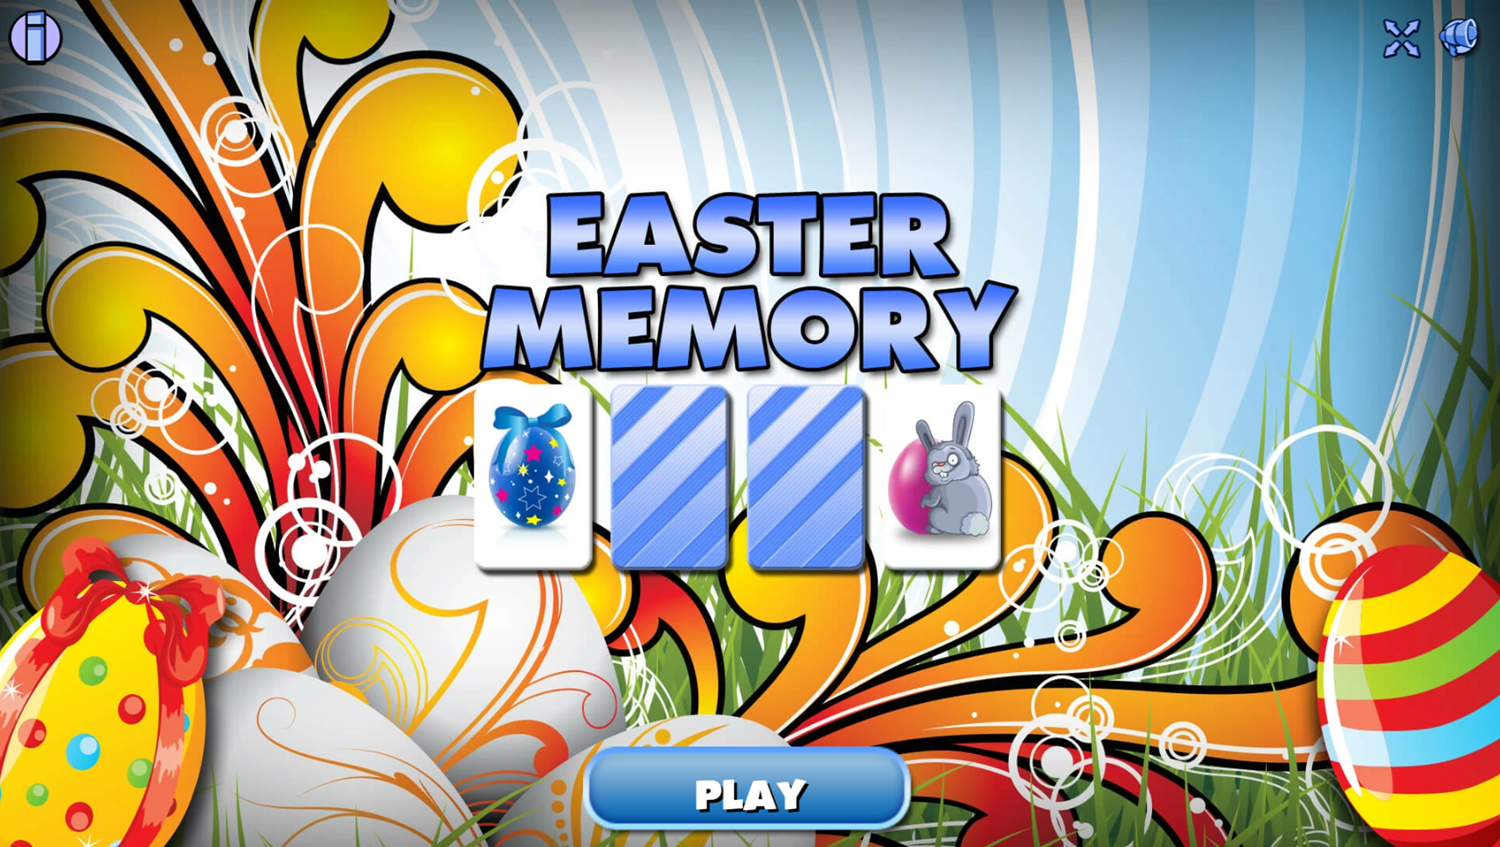 Easter Memory Game Welcome Screen Screenshot.